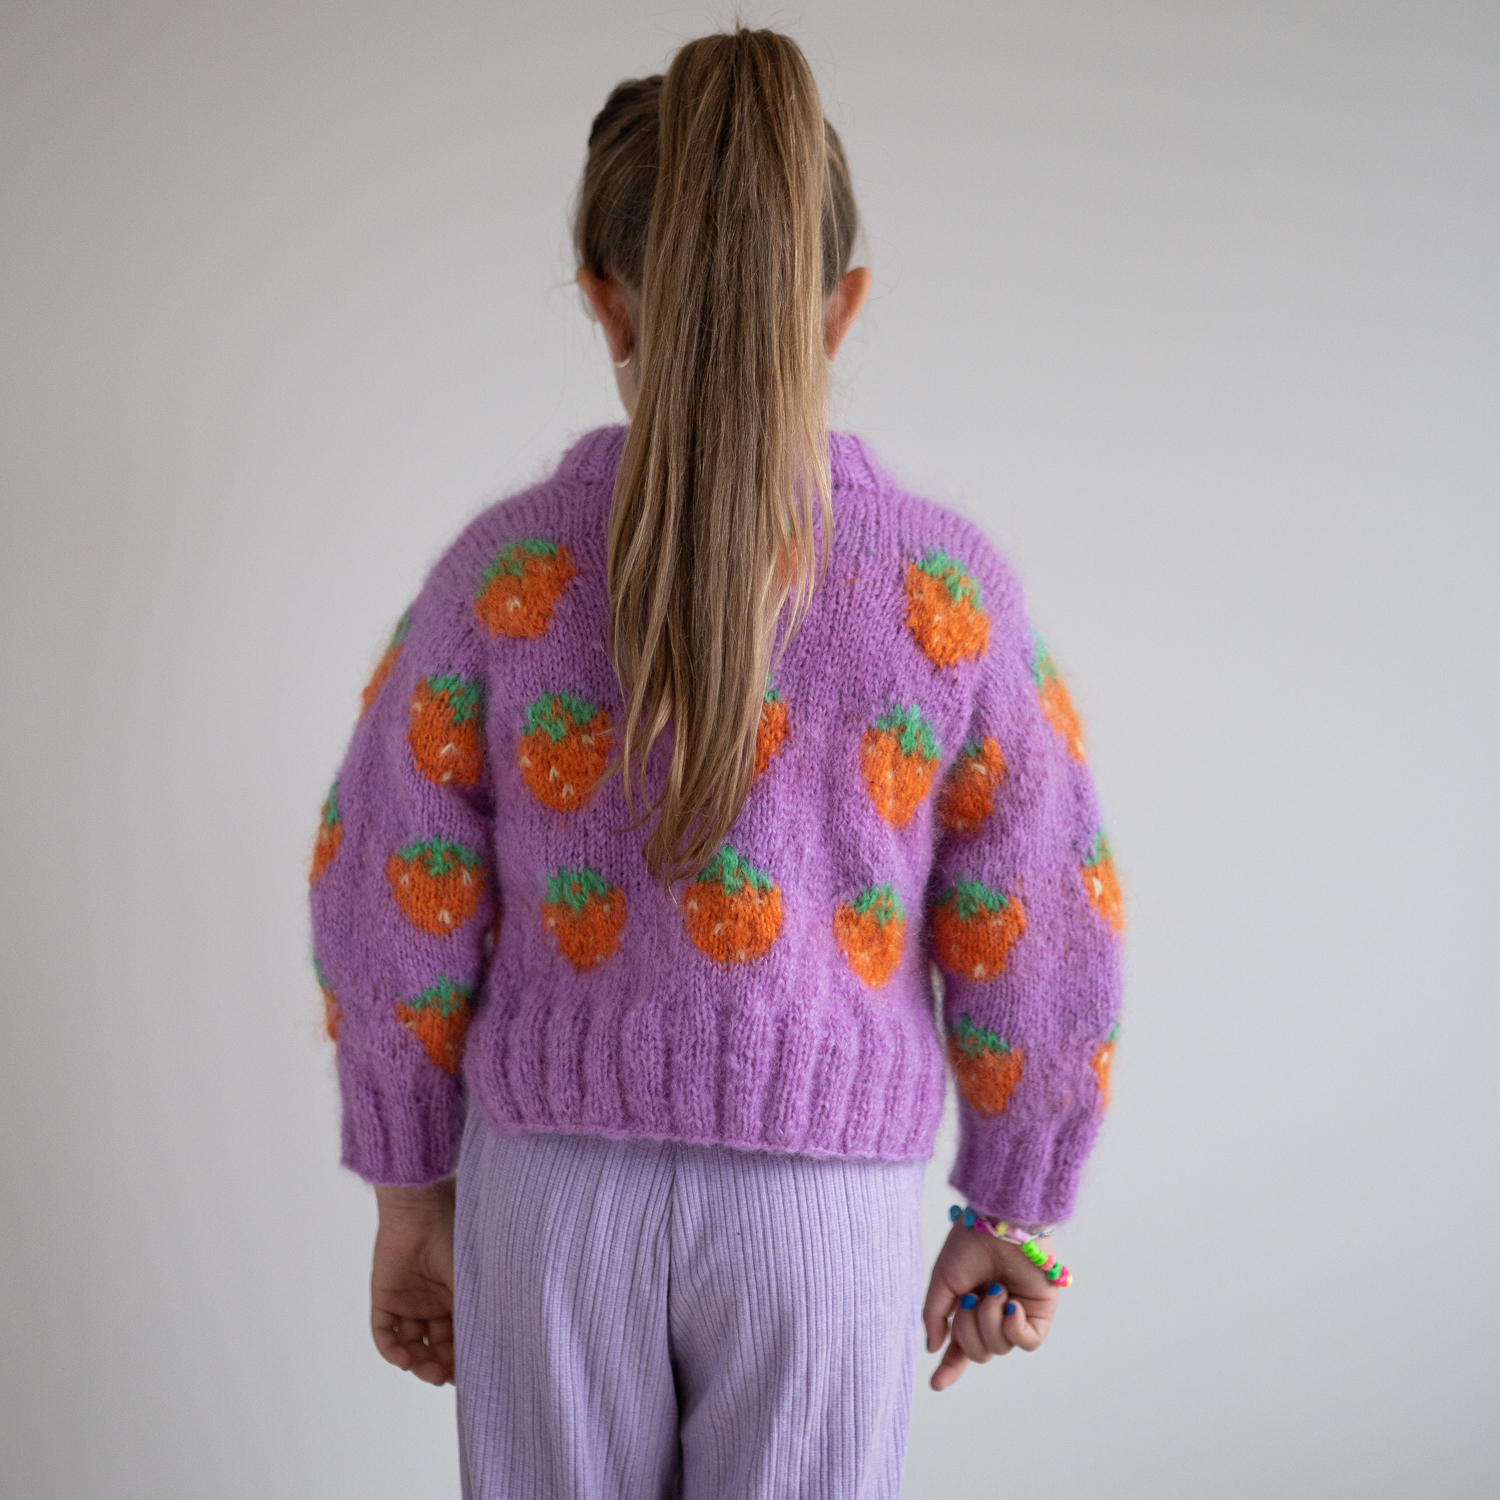  - Fruity sweater | Knitting pattern kids | by HipKnitShop - 01/12/2022